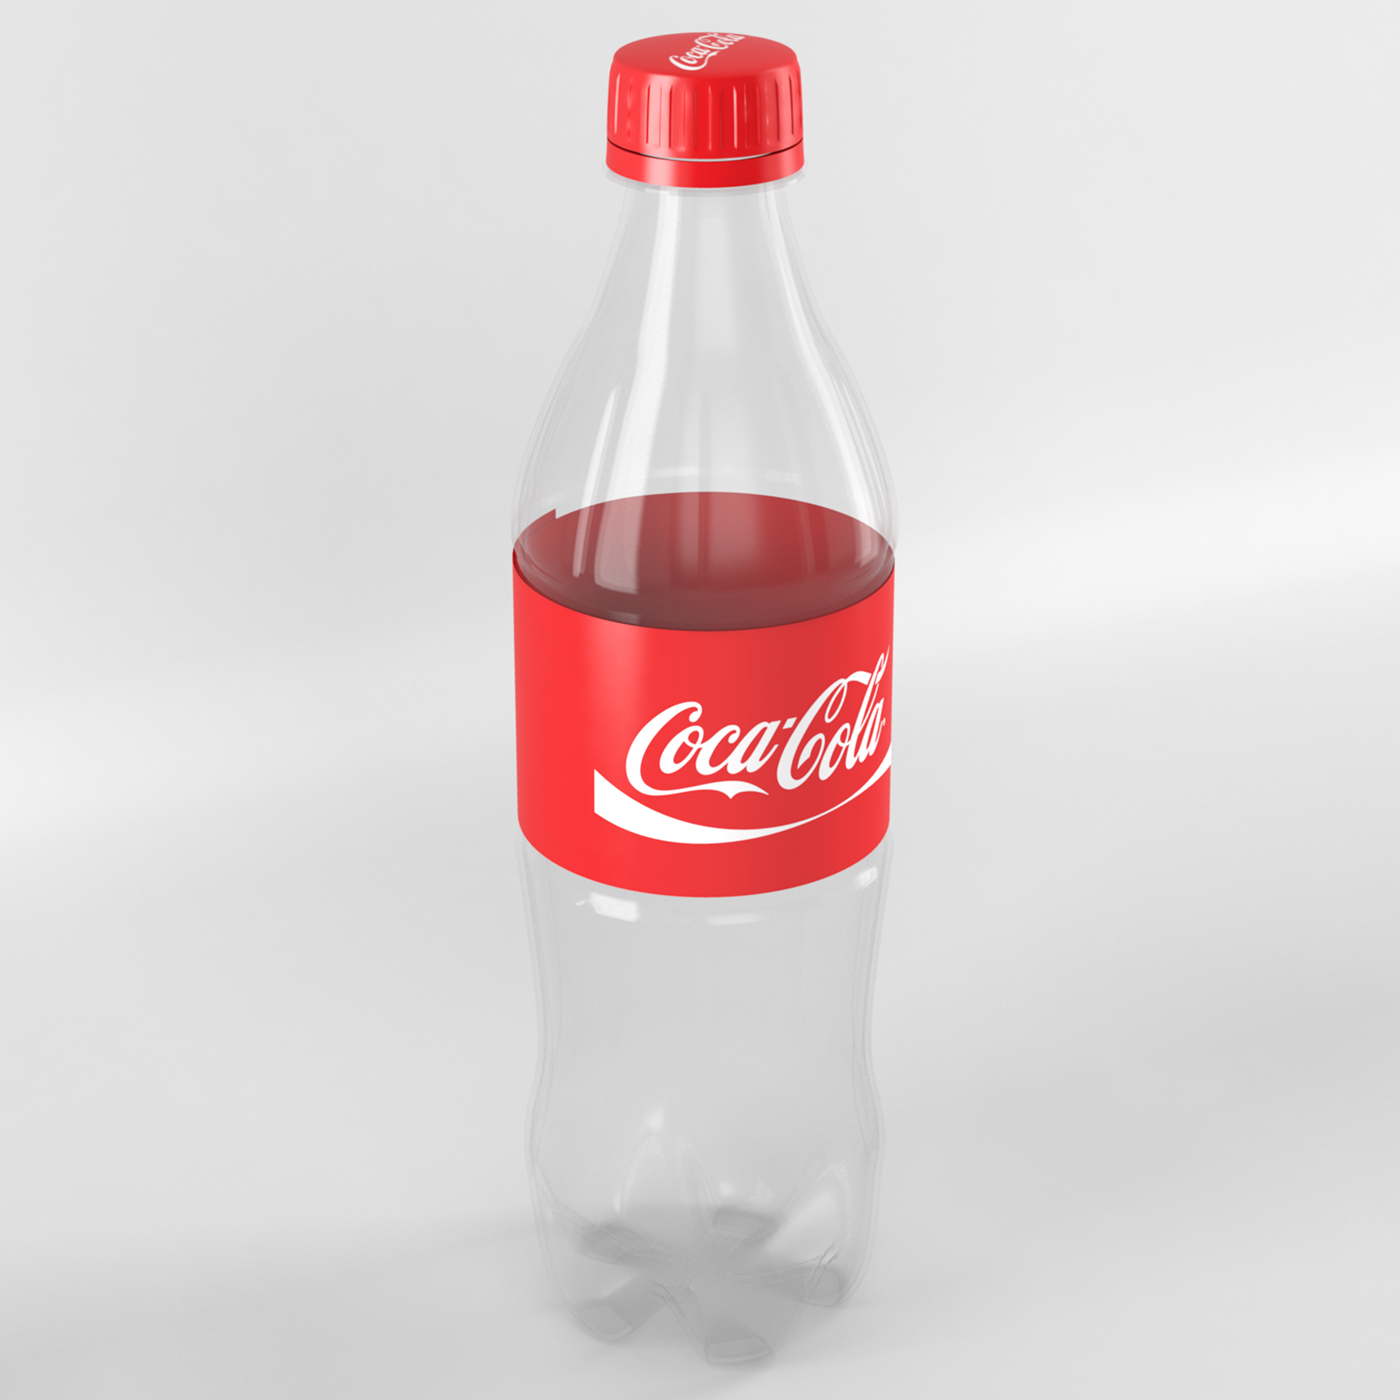 cola bottle product 3D modelling lighting studio setup coke plastic water drops soda drink coca